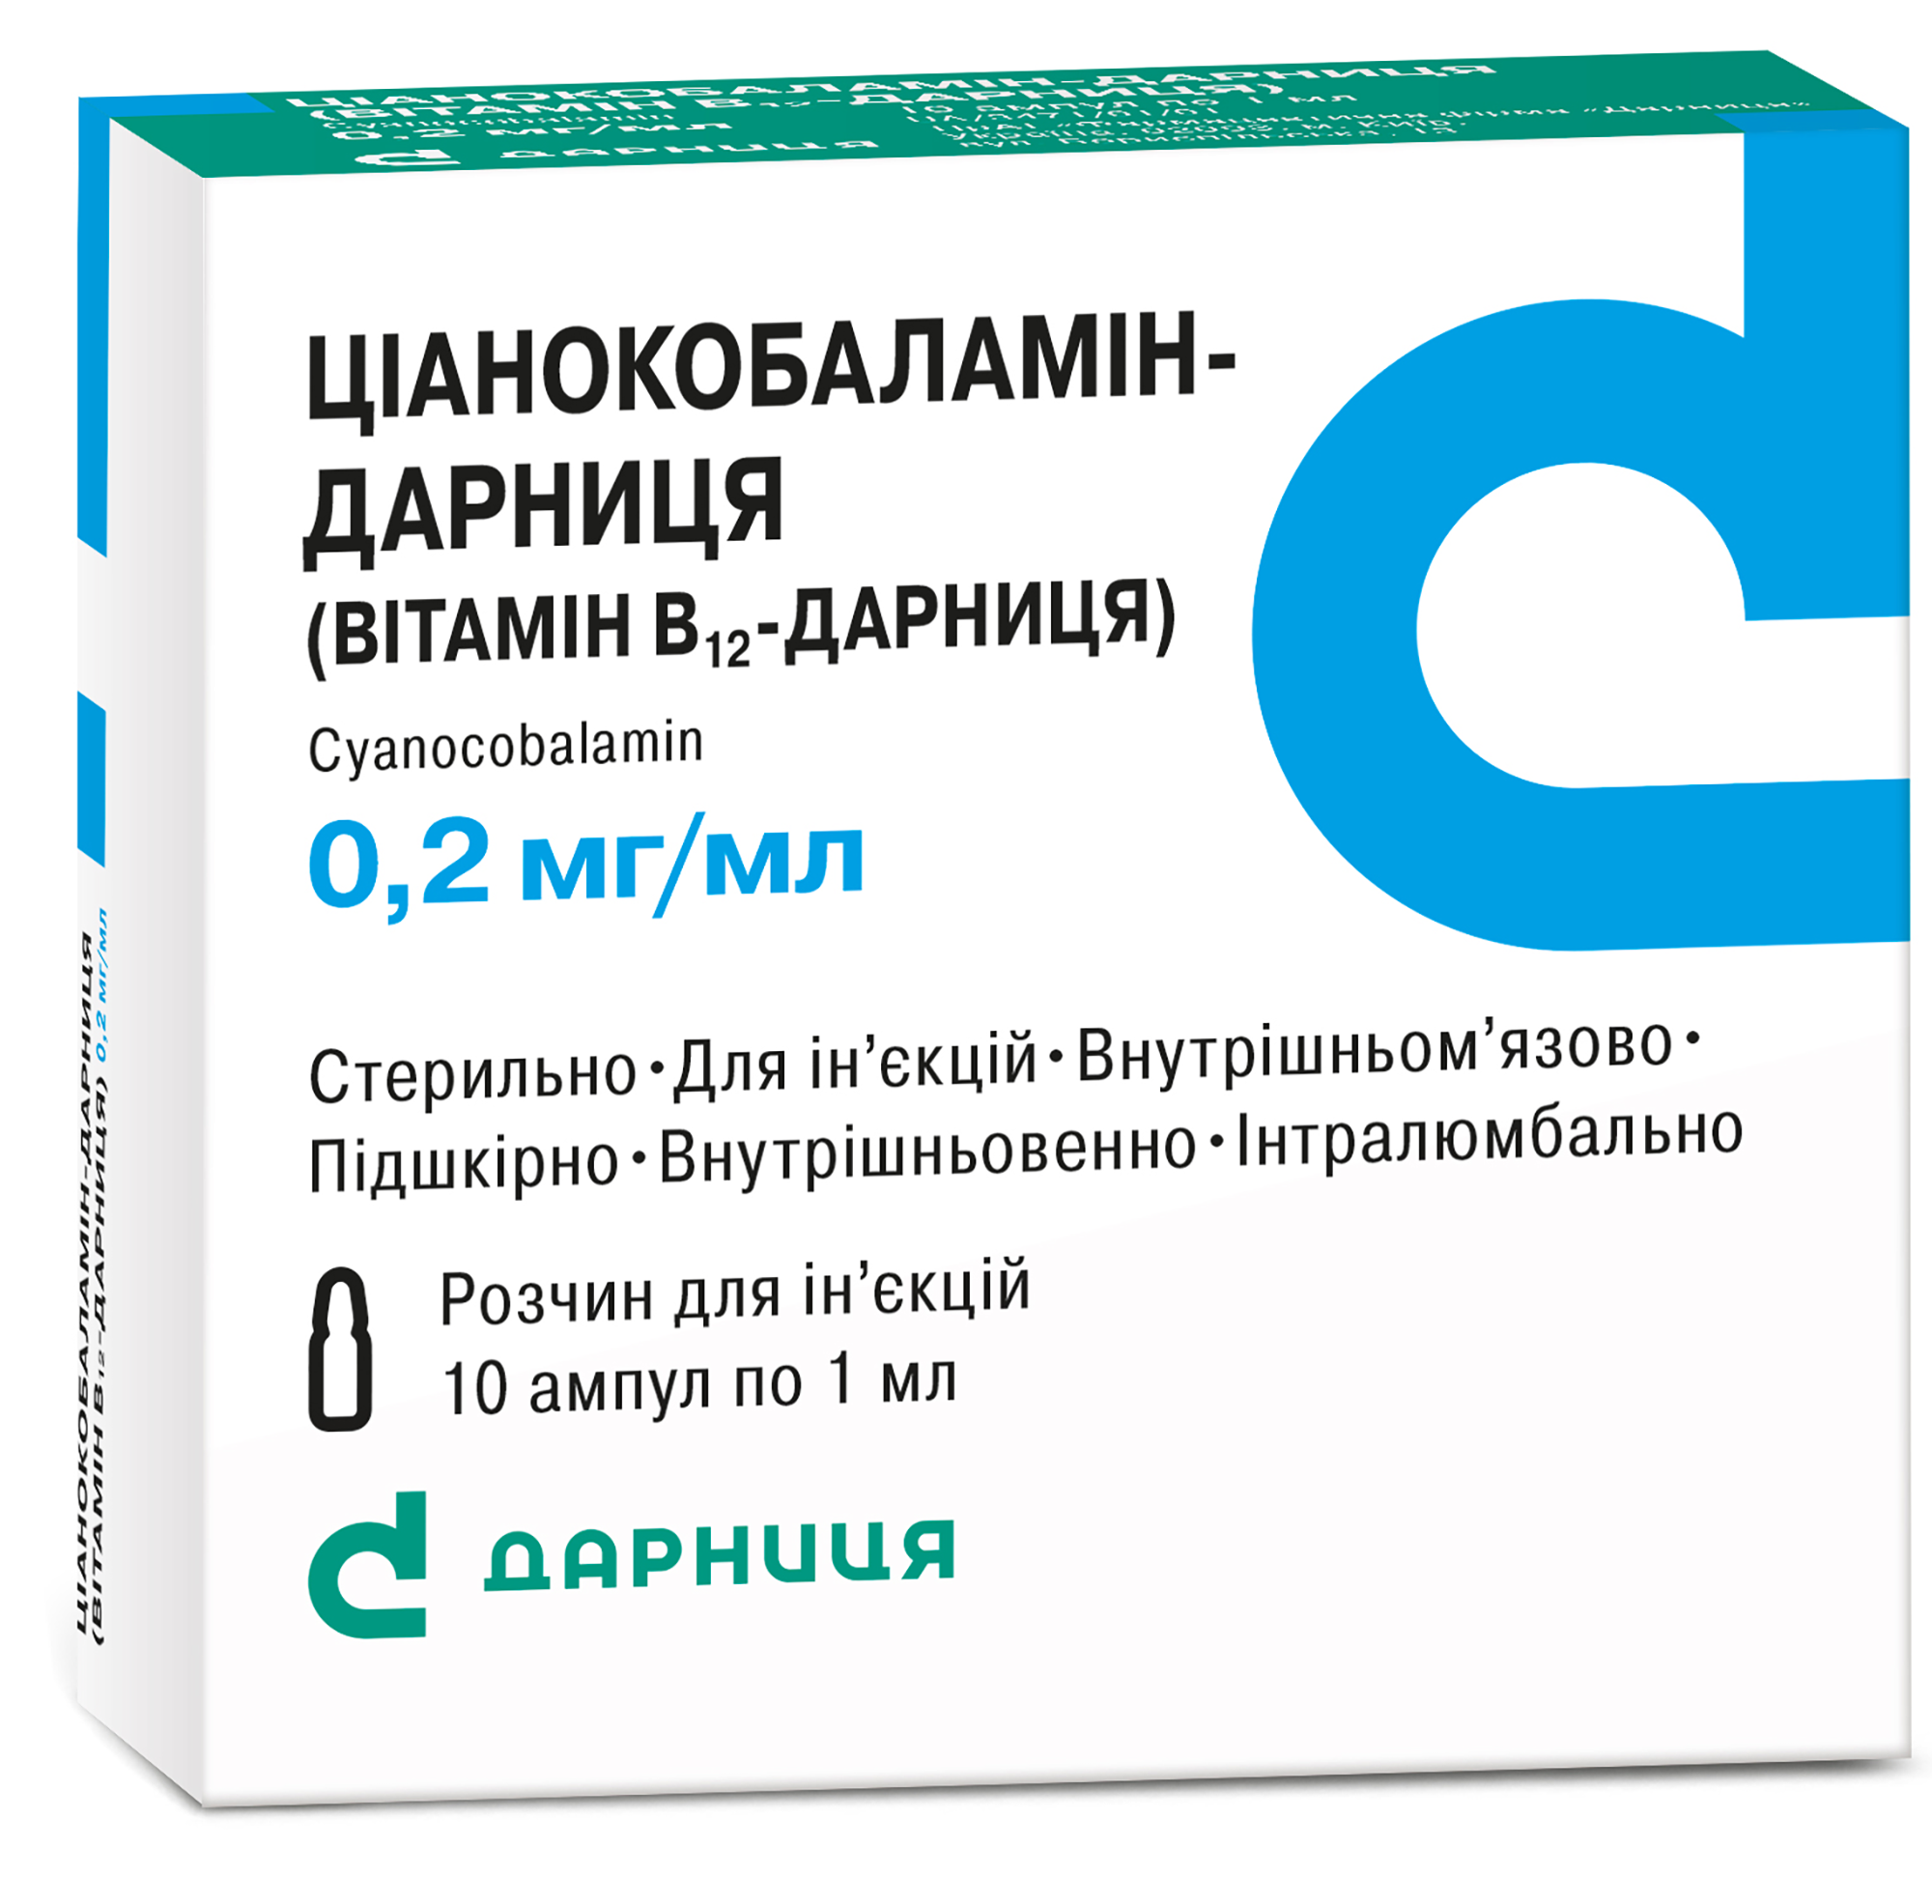 Cyanocobalamine-Darnitsa